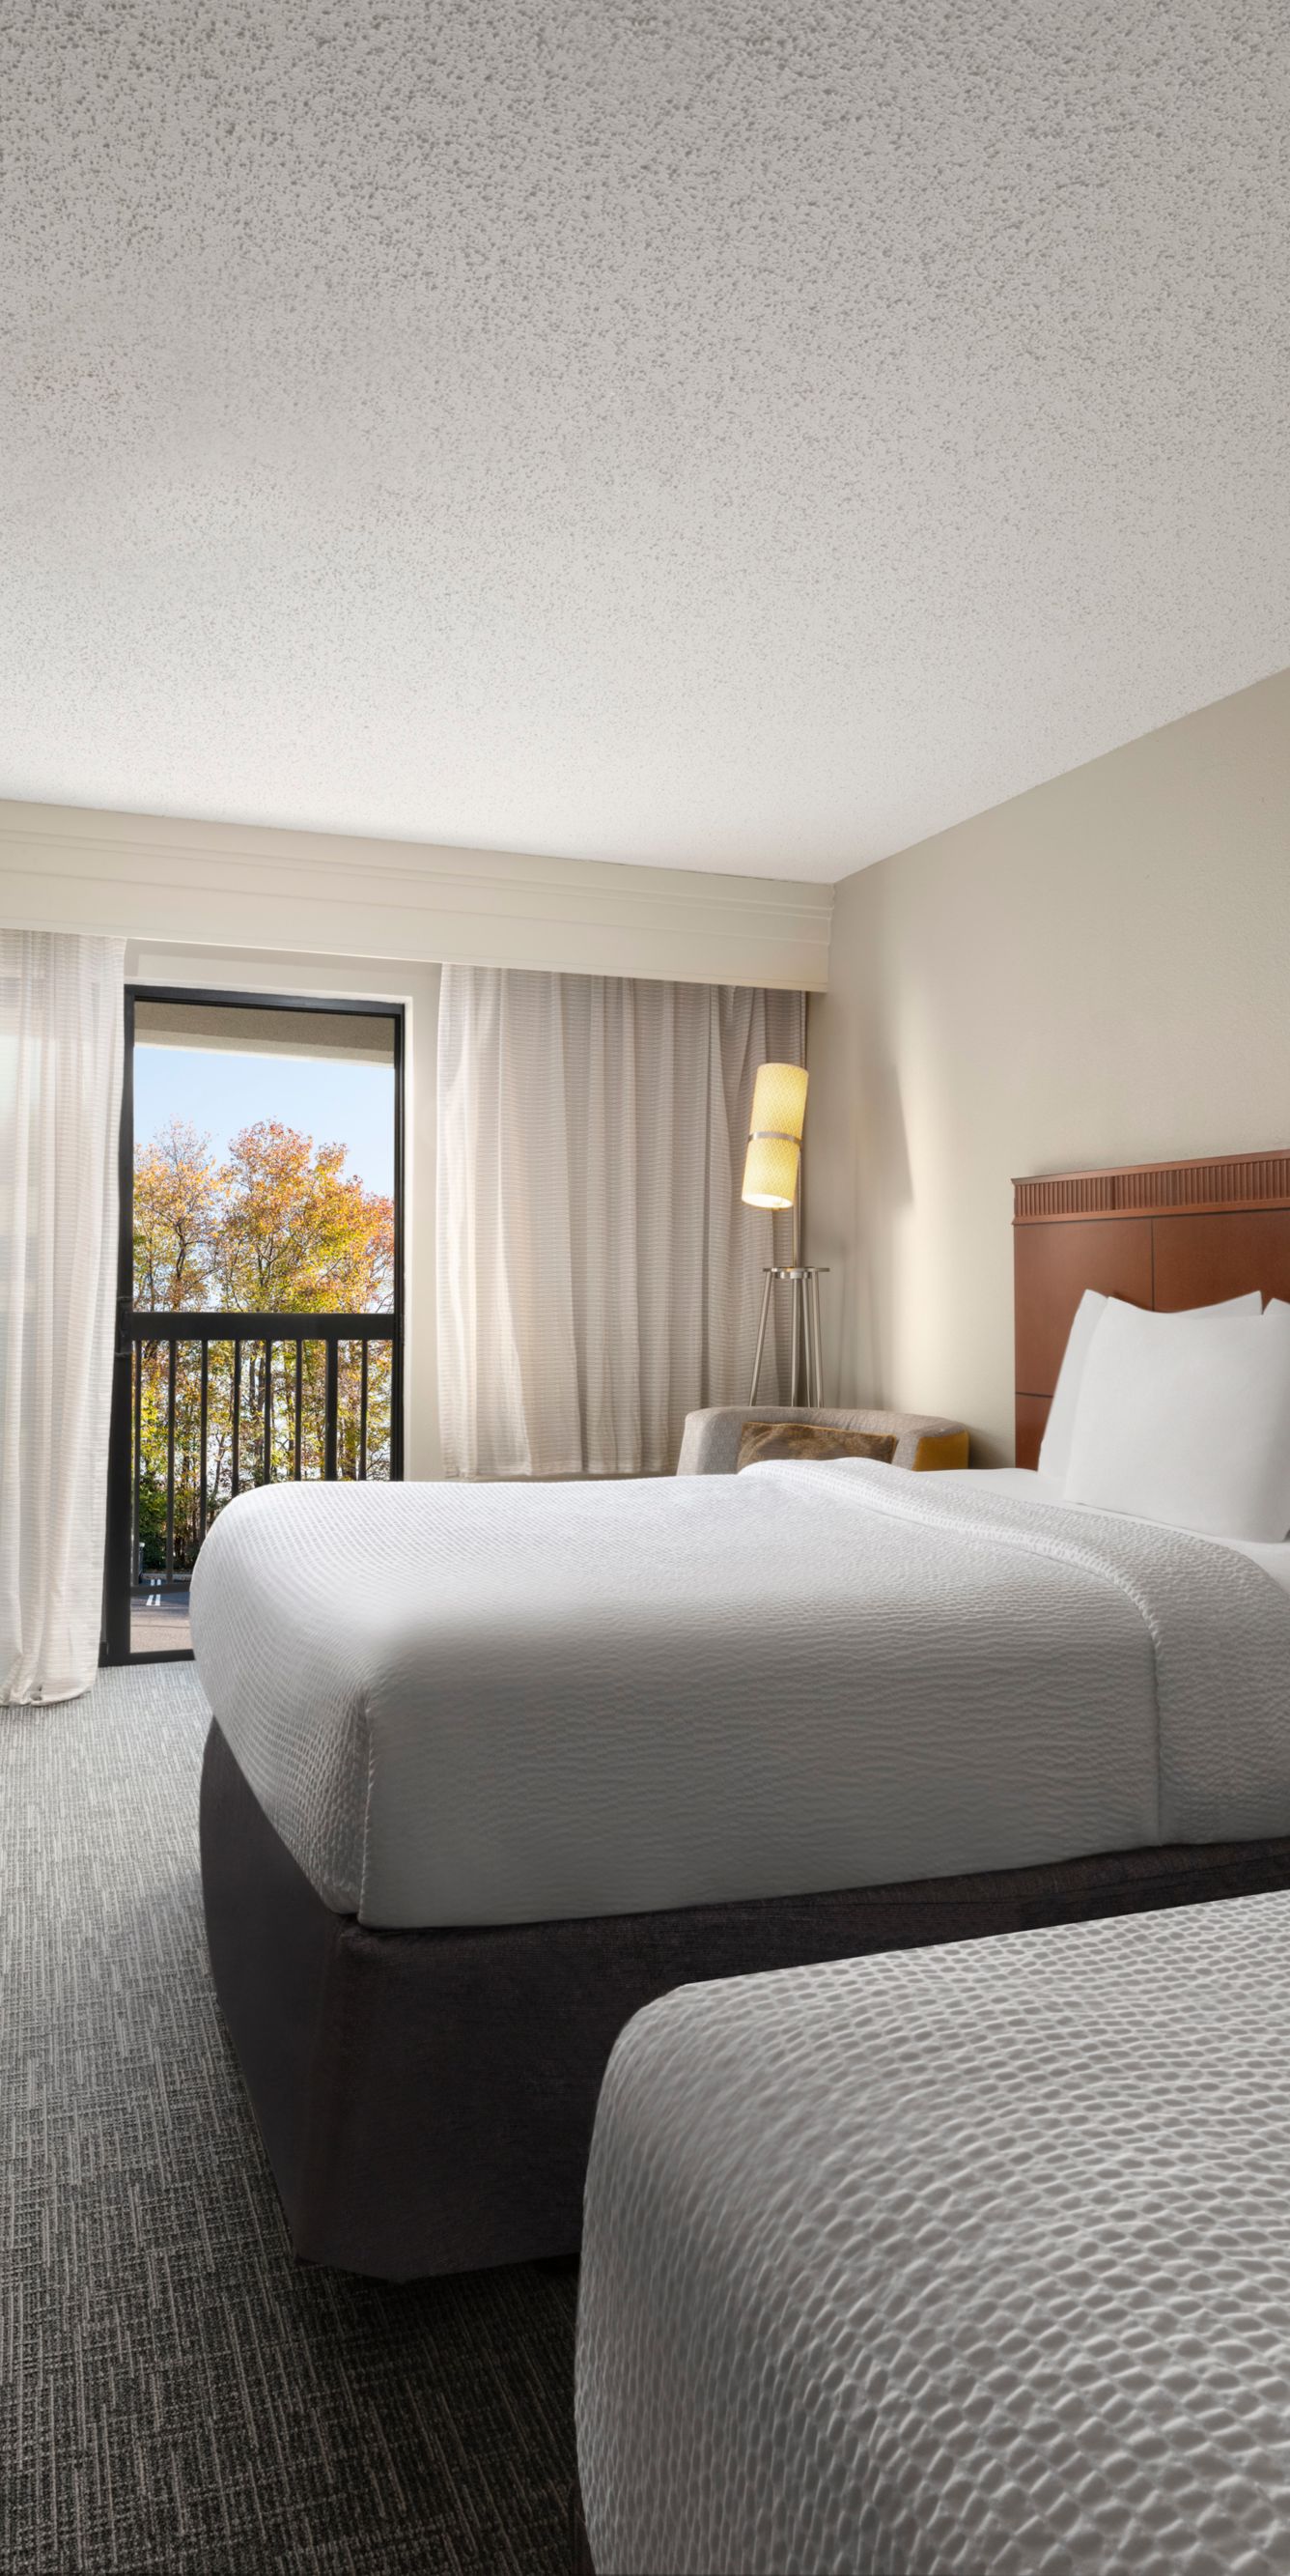 Buy Luxury Hotel Bedding from Marriott Hotels - Frameworks Bed